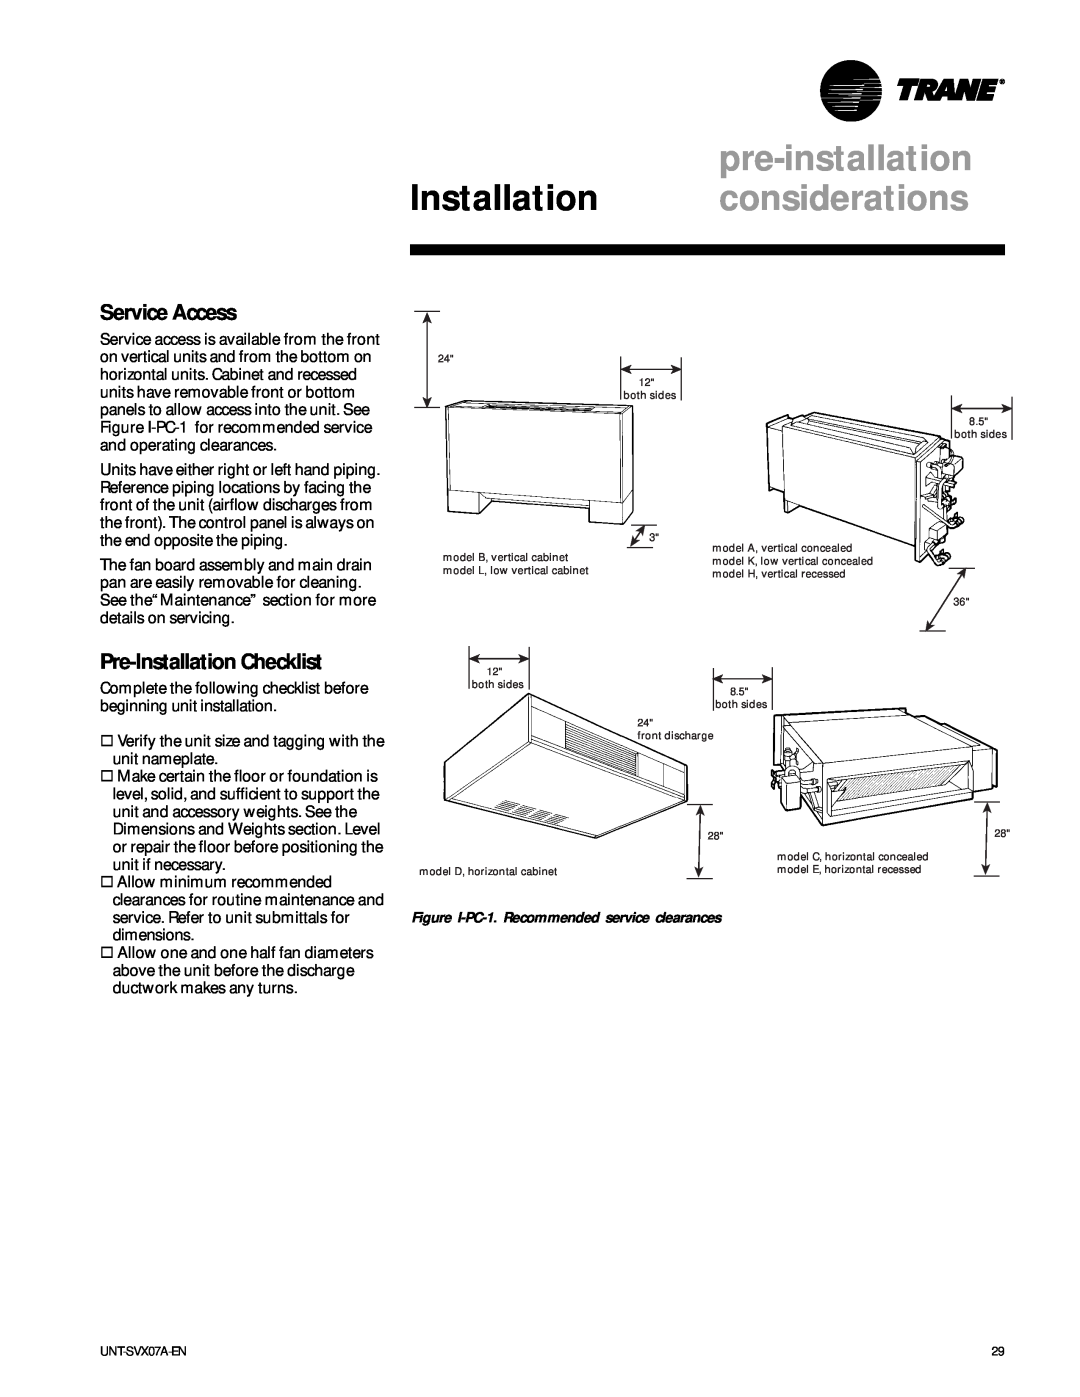 Trane UniTrane Fan-Coil & Force Flo Air Conditioners, UNT-SVX07A-EN manual Service Access, Pre-Installation Checklist 